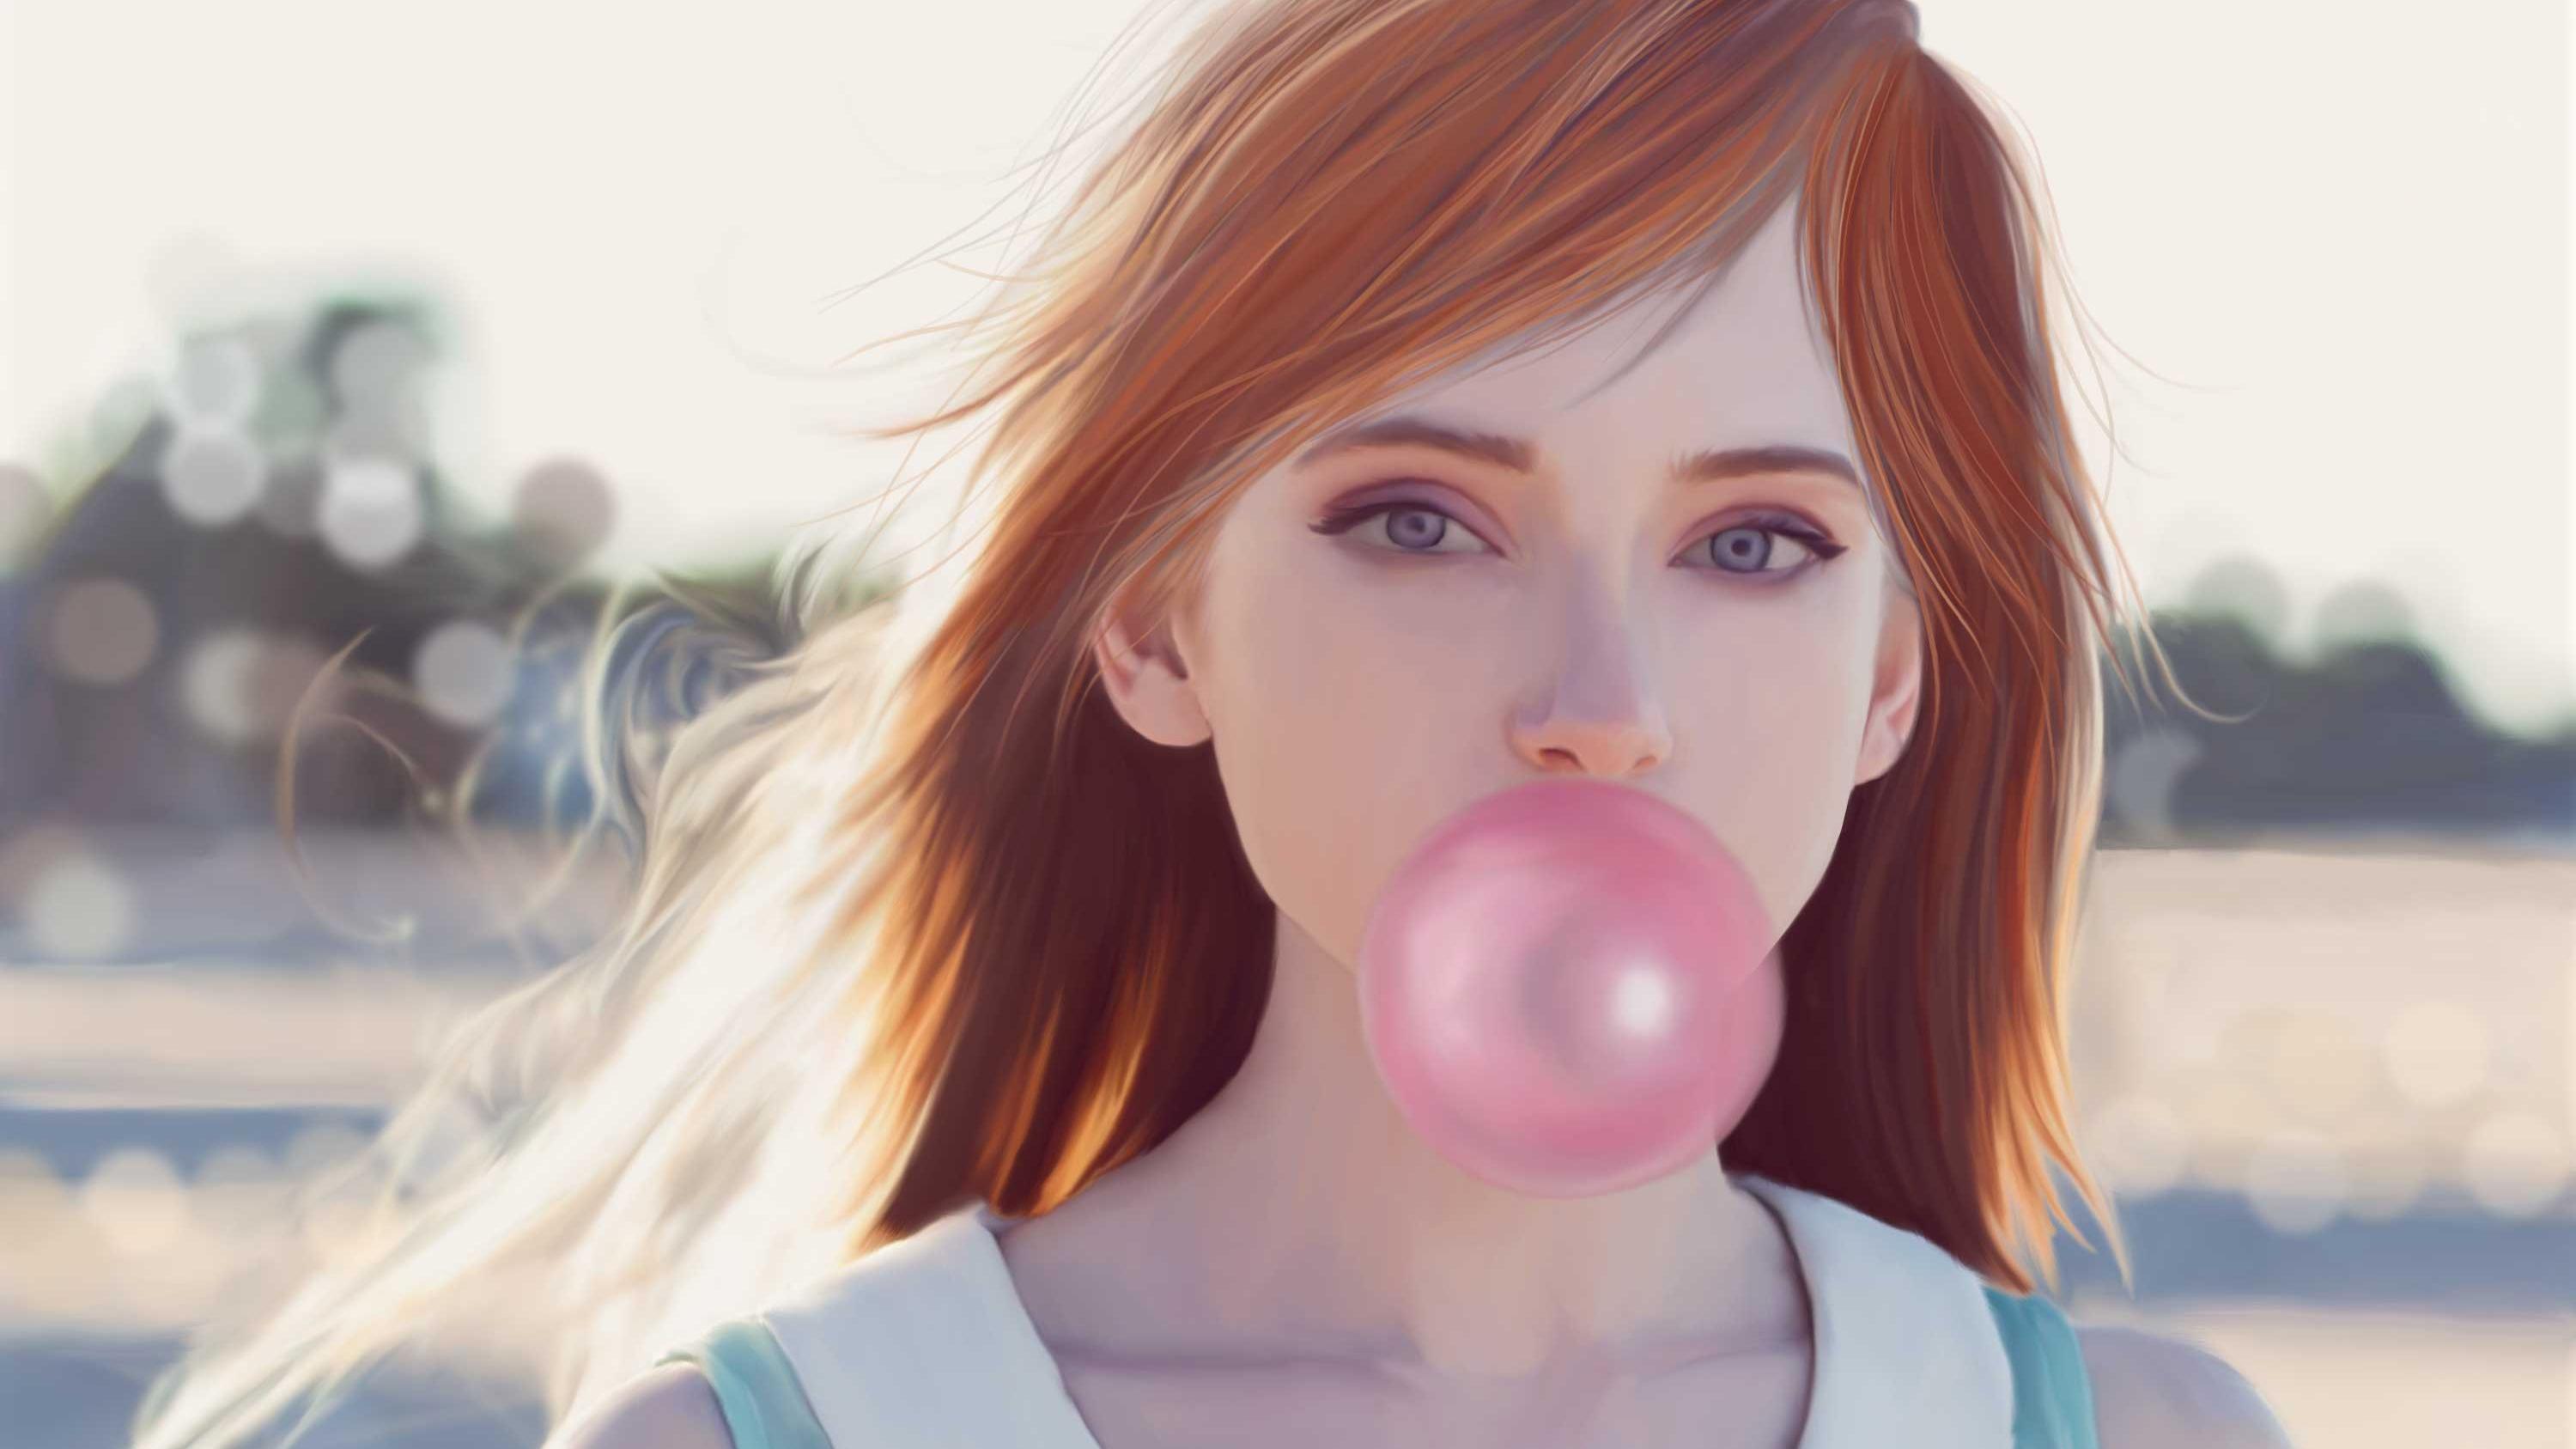 Girl Blowing Bubble Gum, HD Fantasy Girls, 4k Wallpaper